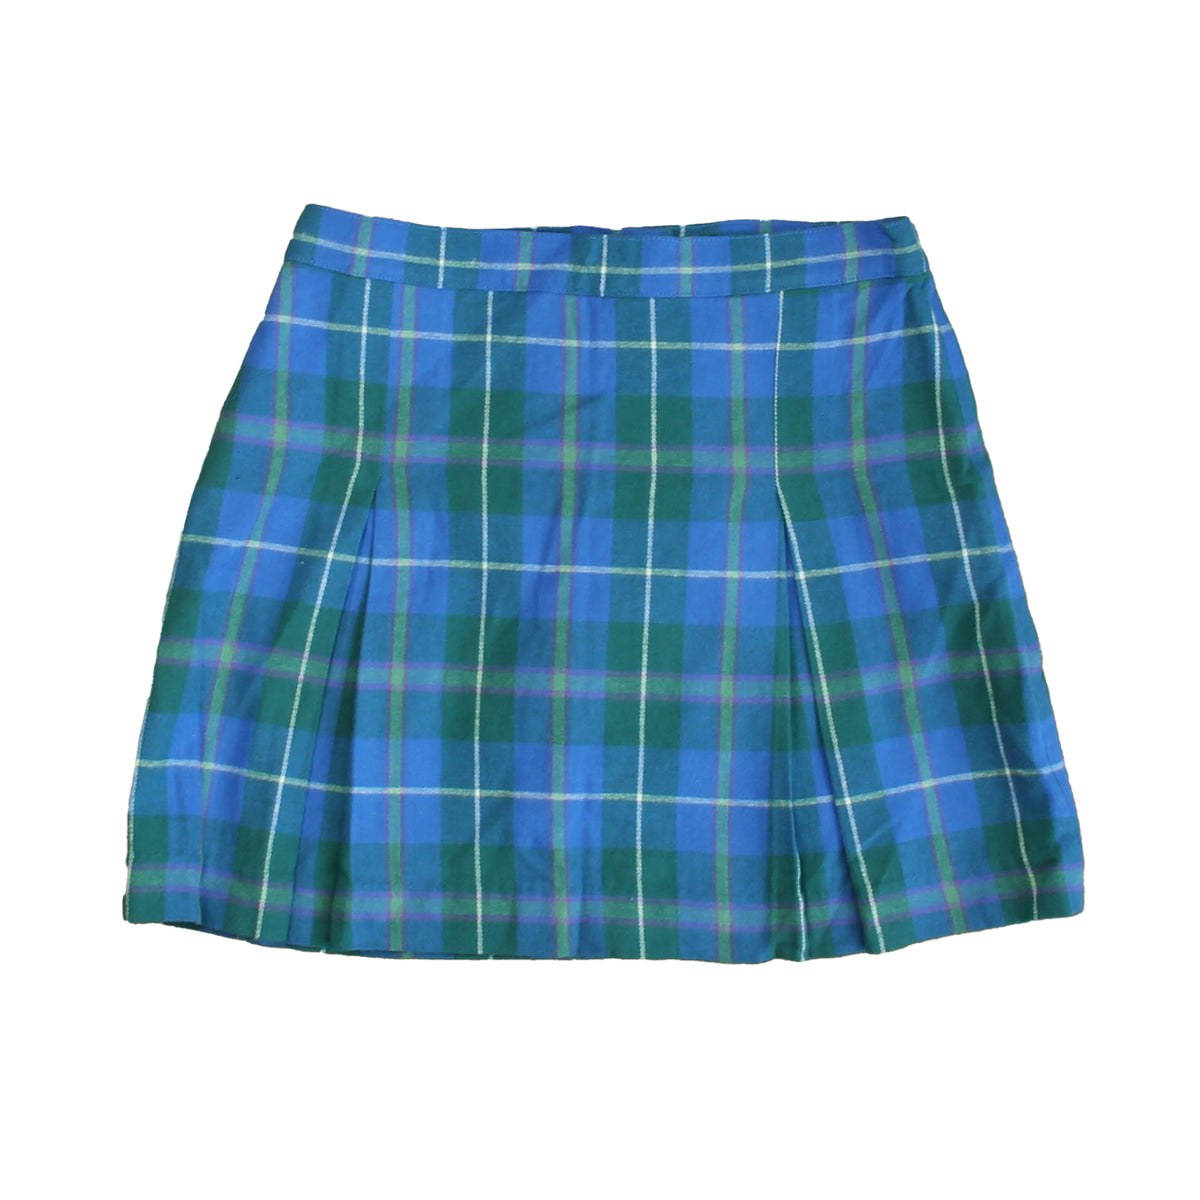 New with Tags: Rowayton Plaid Skirt -- FINAL SALE